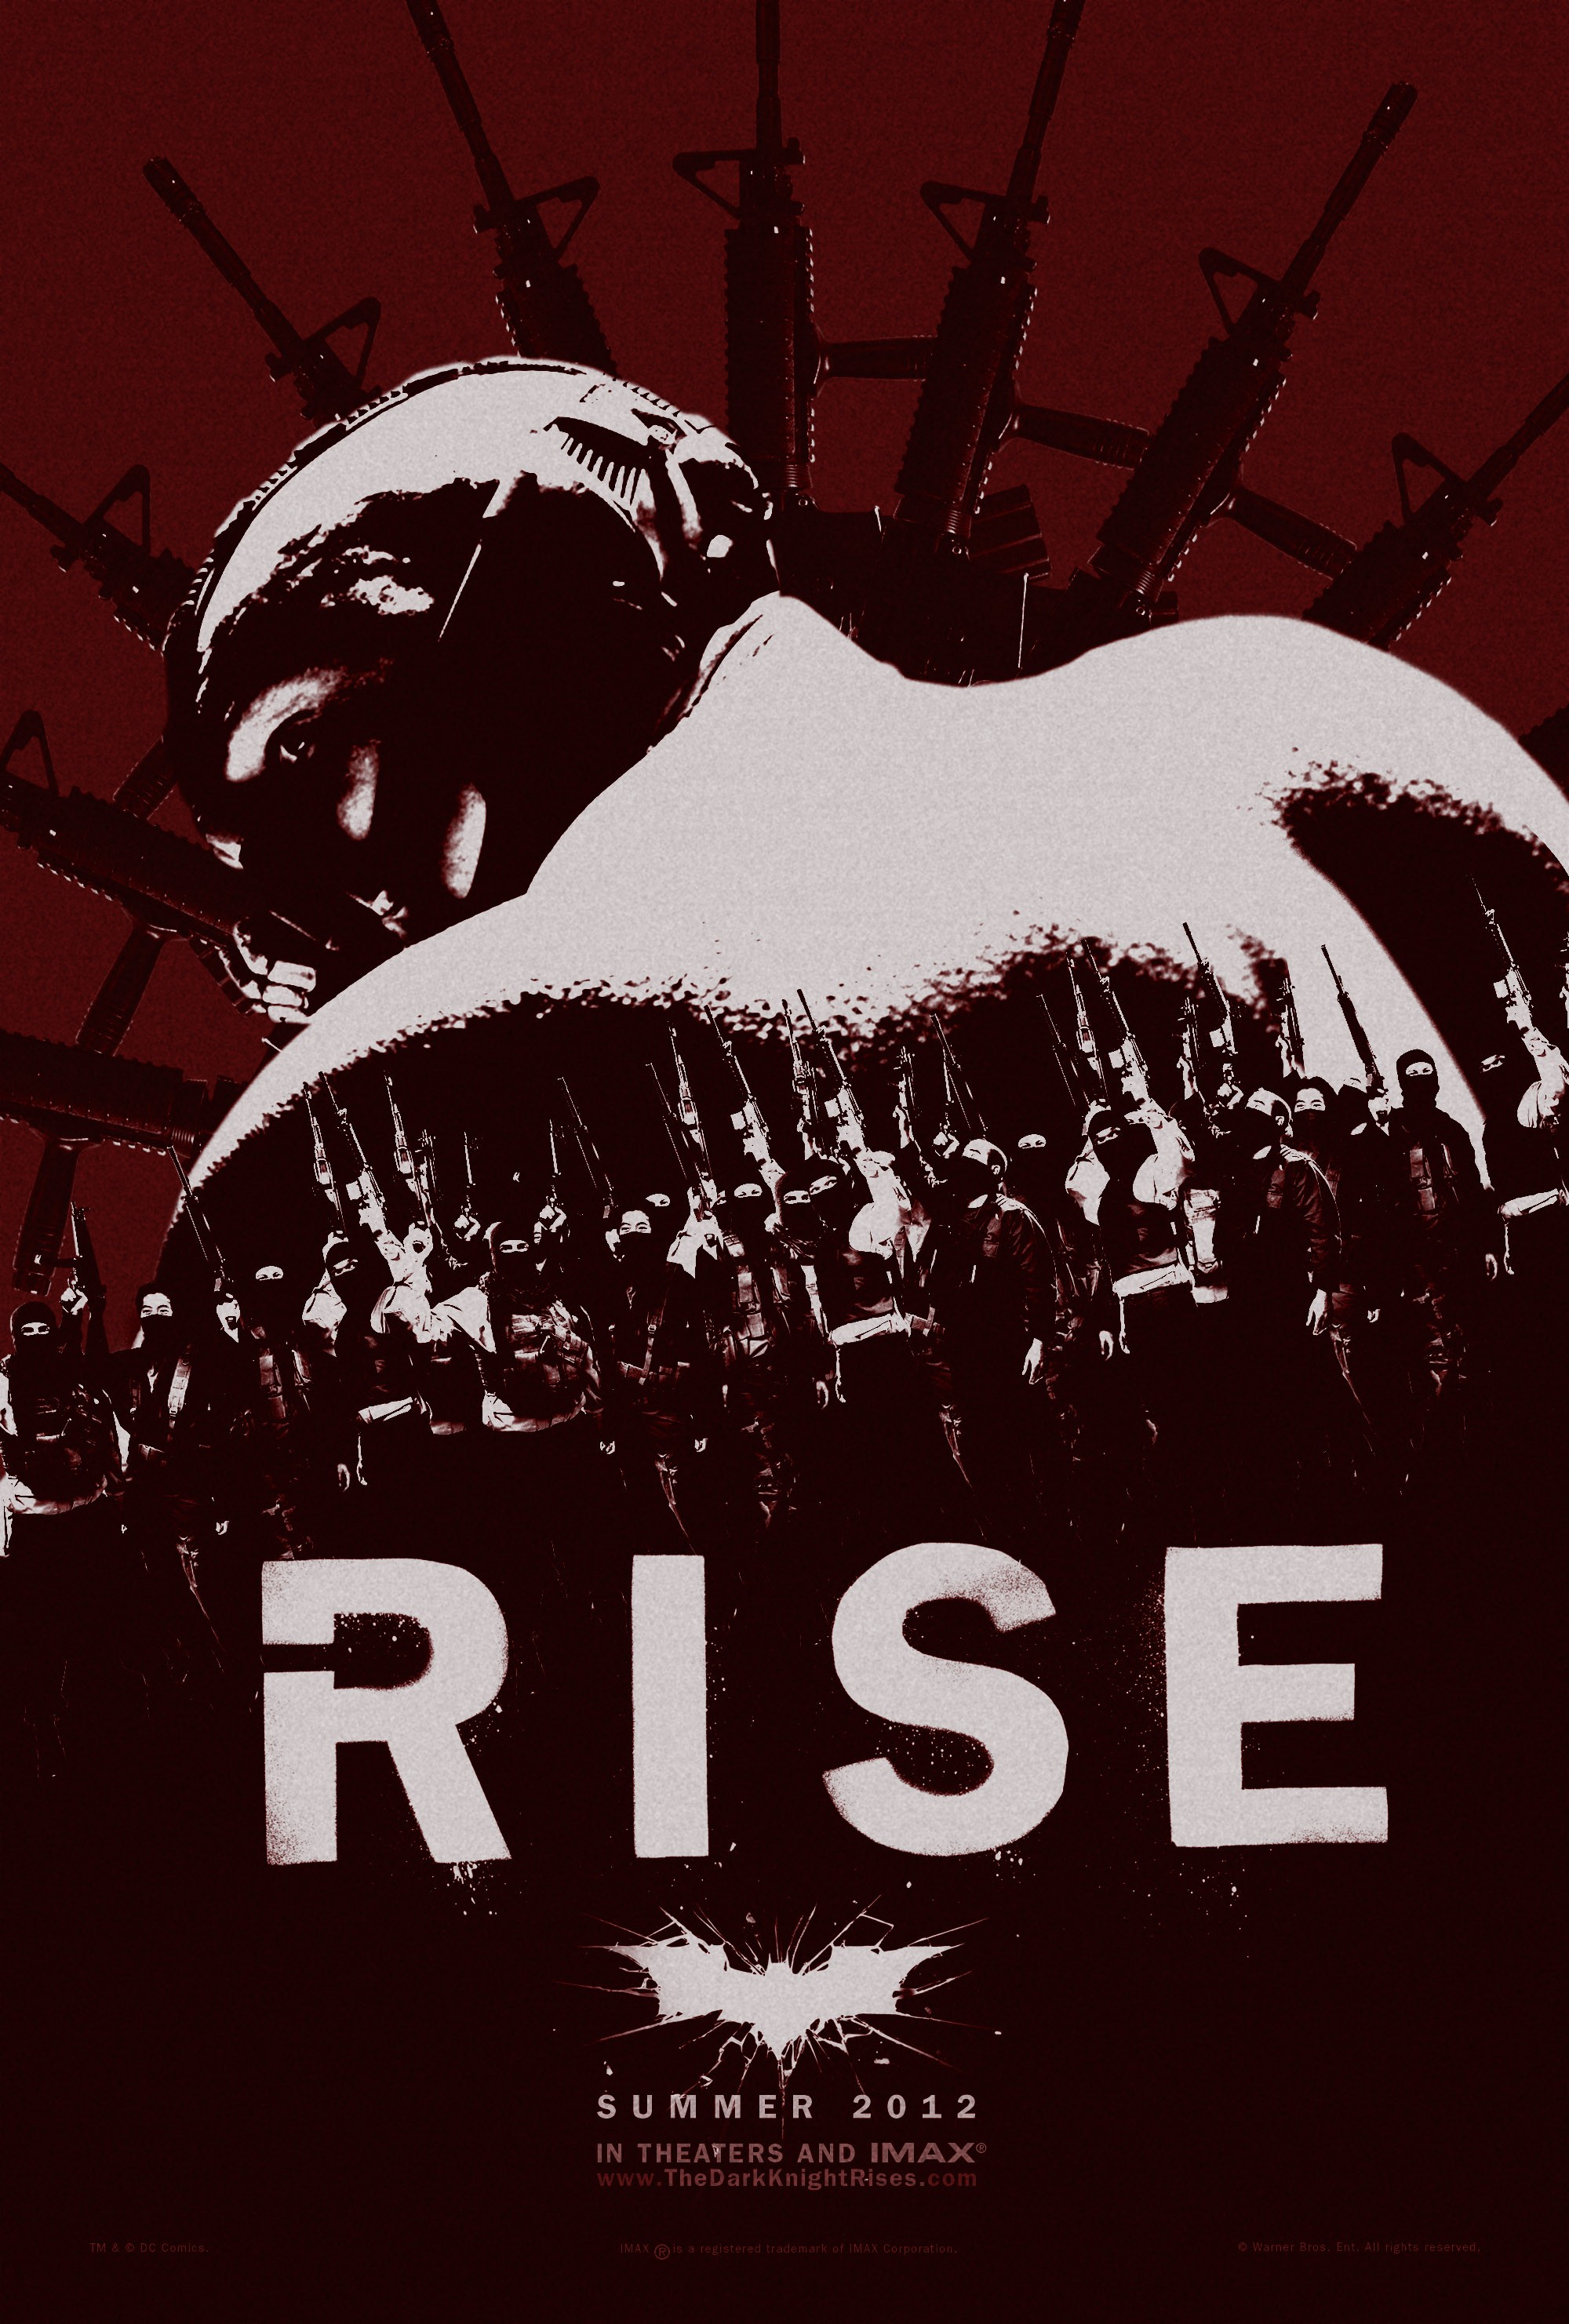 The Dark Knight Rises – International TV Spot & Viral Bane Poster